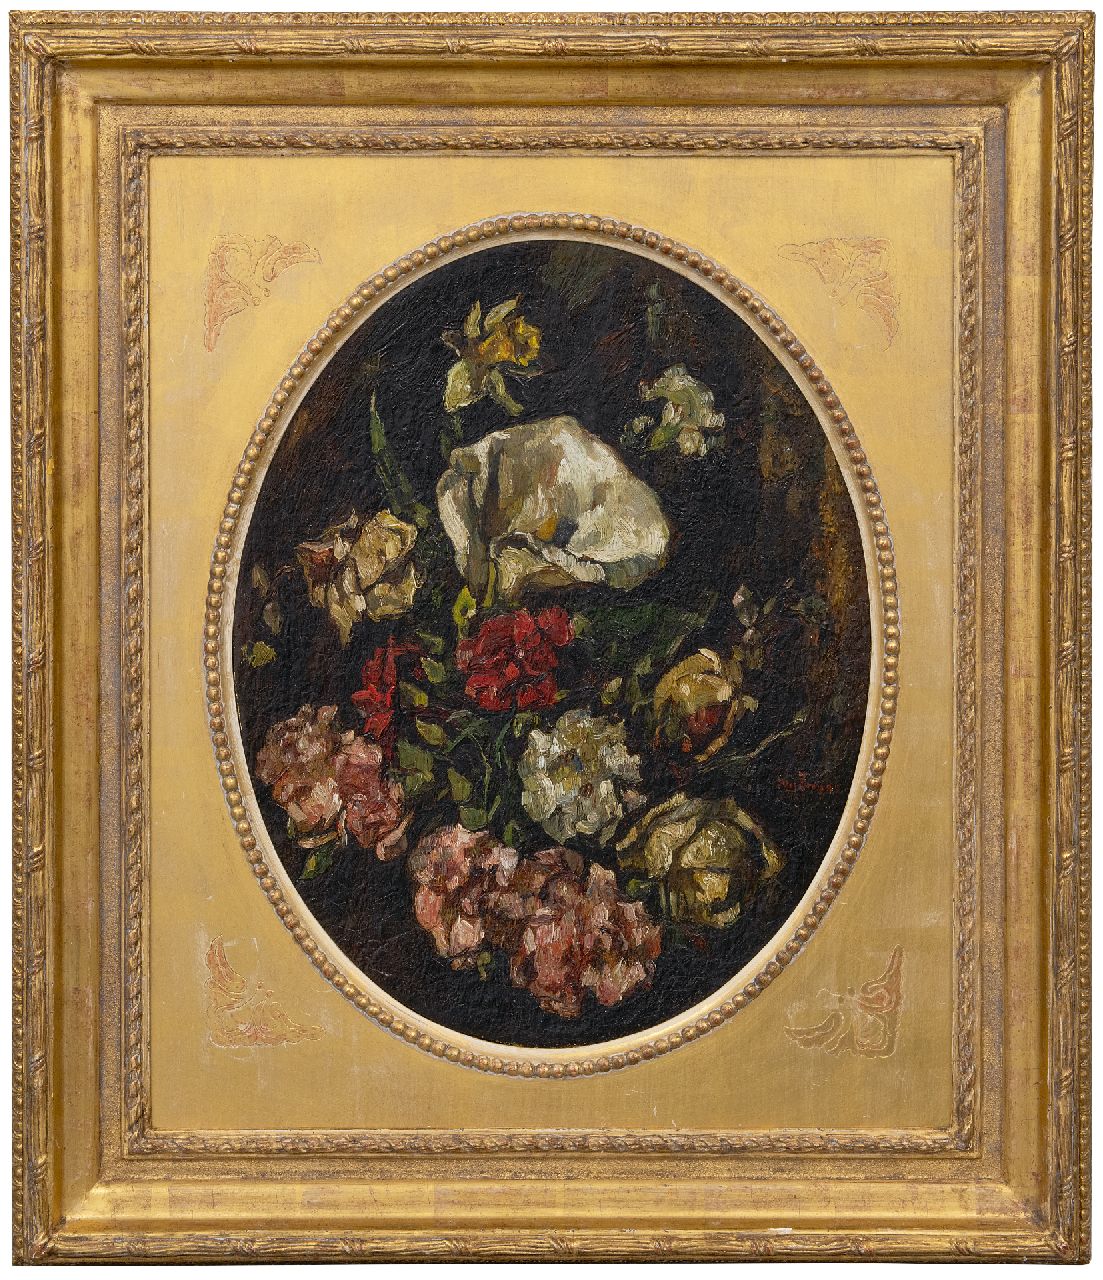 Zwart W.H.P.J. de | Wilhelmus Hendrikus Petrus Johannes 'Willem' de Zwart | Paintings offered for sale | A bouquet with an arum, narcissus and roses, oil on canvas 44.2 x 35.3 cm, signed c.r.